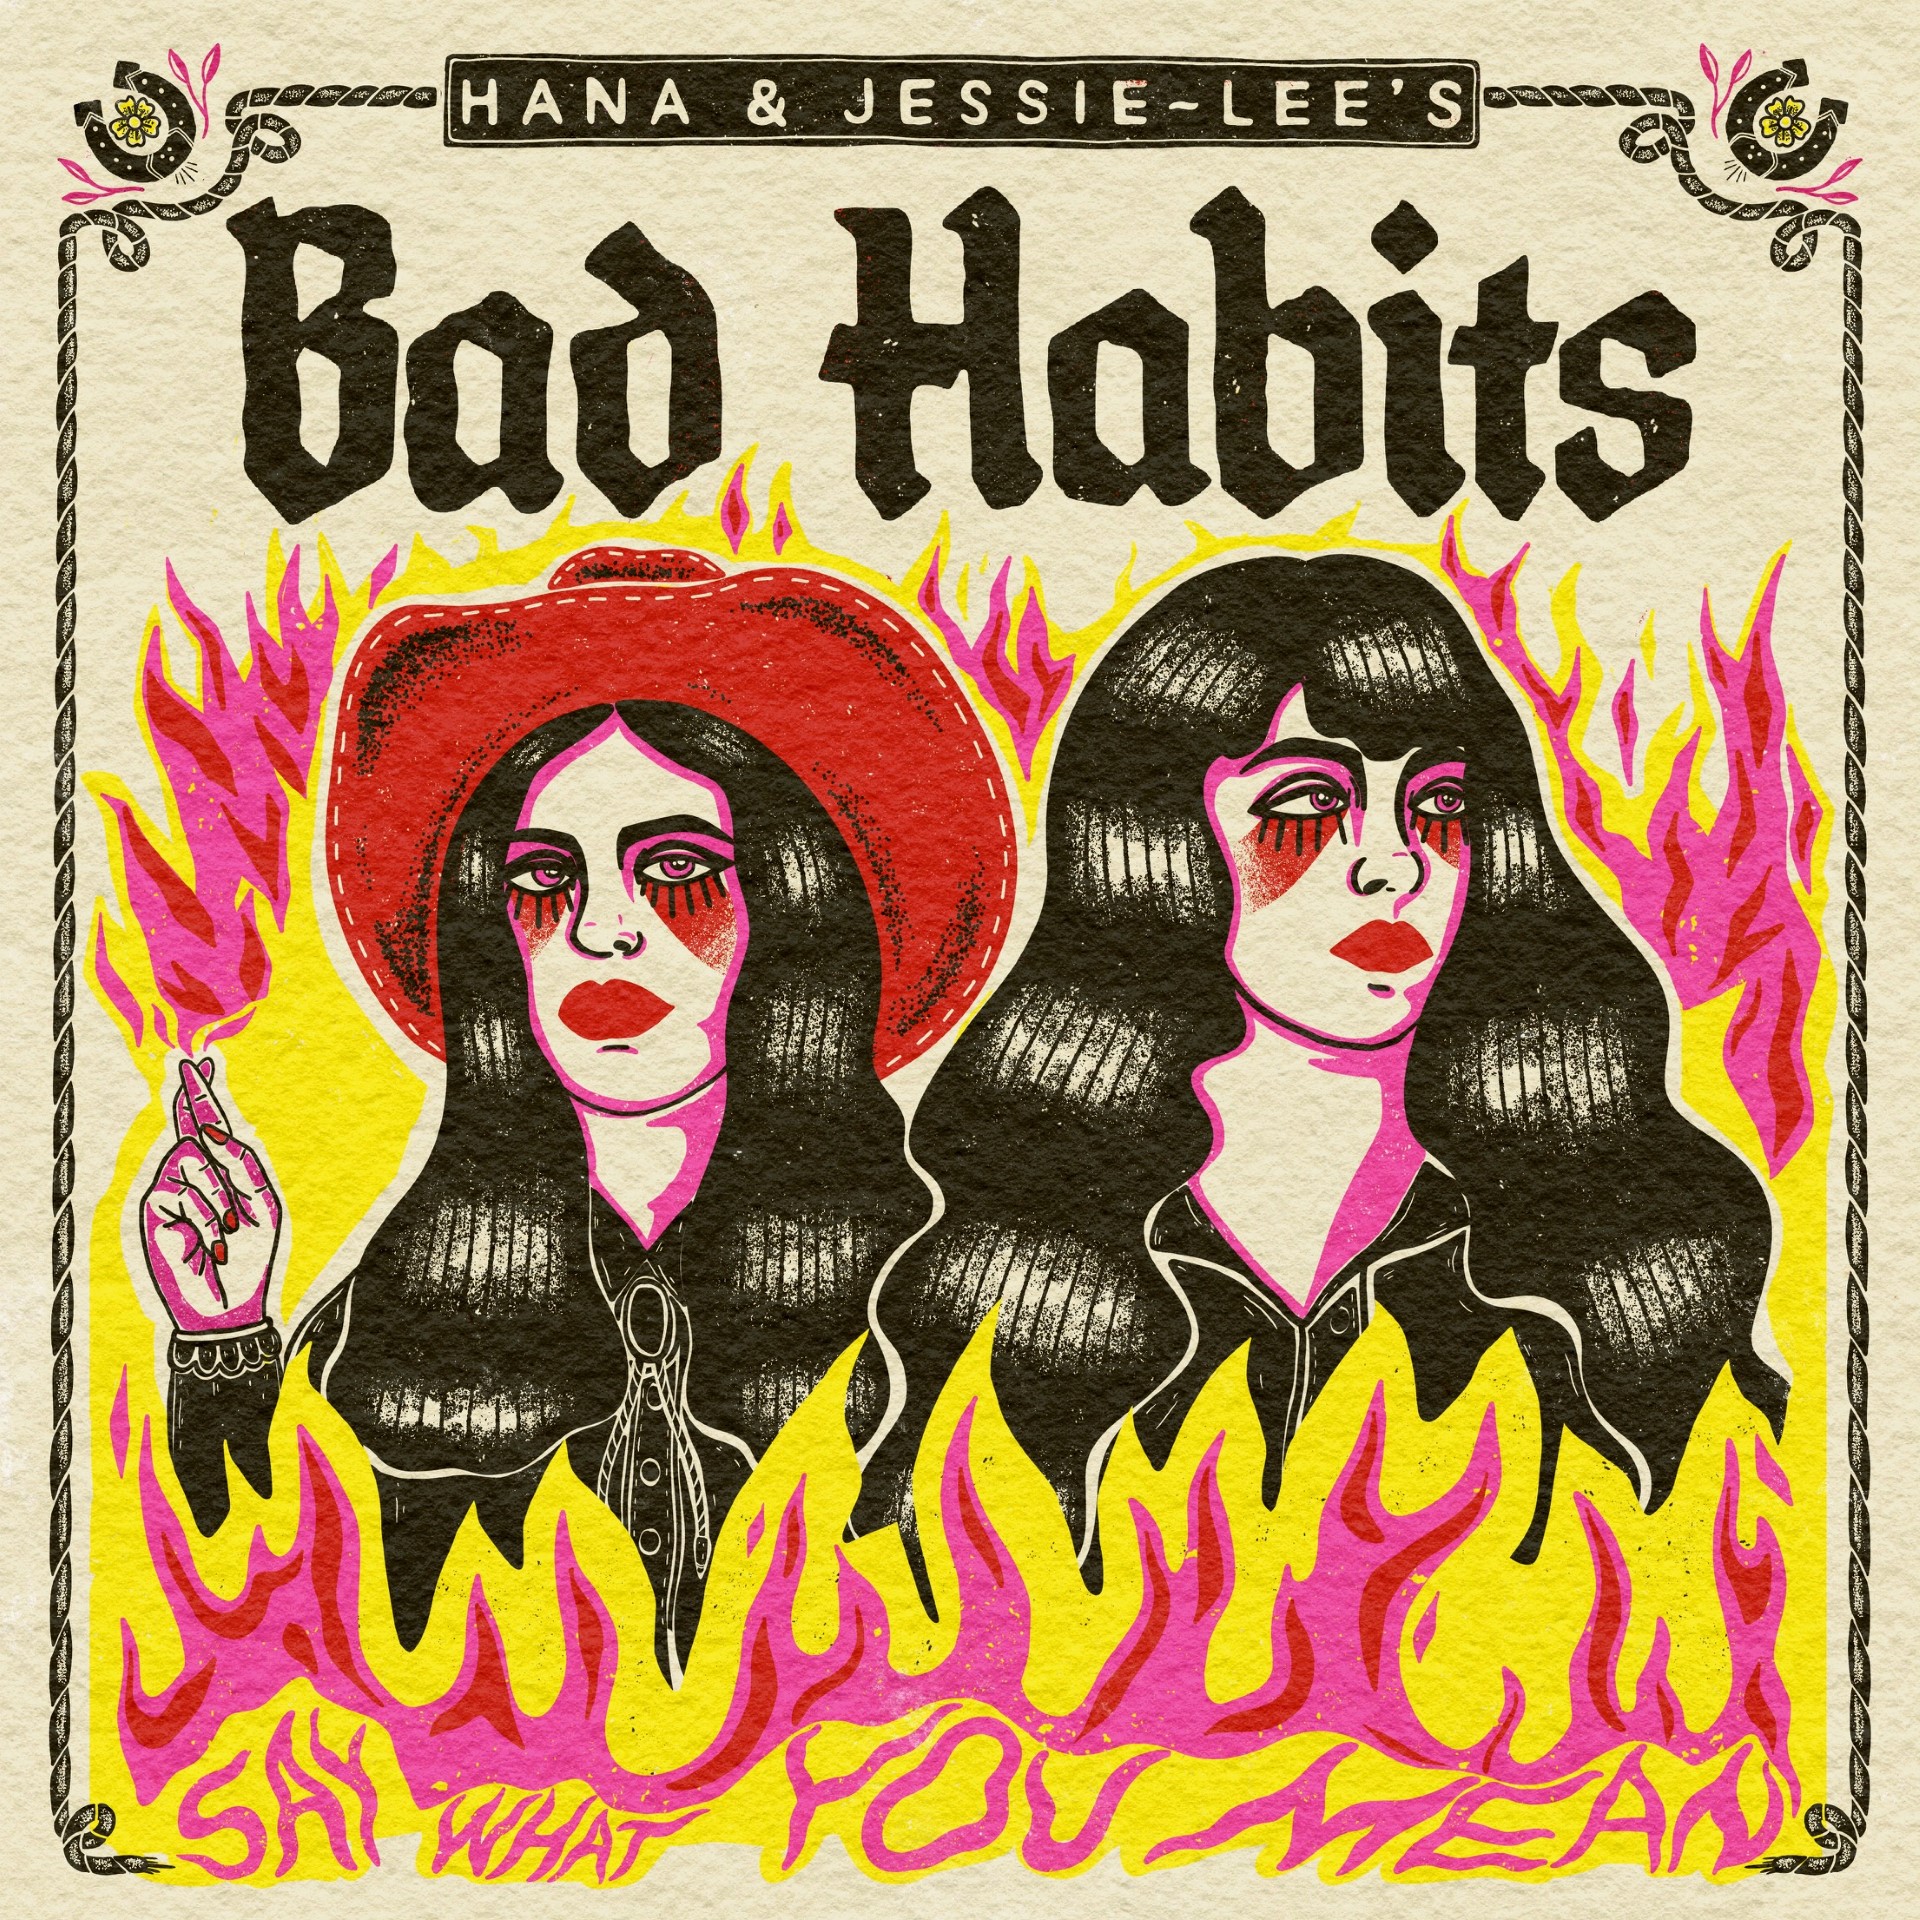 HANA & JESSIE-LEE’S BAD HABITS RELEASE NEW ALBUM AND ANNOUNCE TOUR
DATES